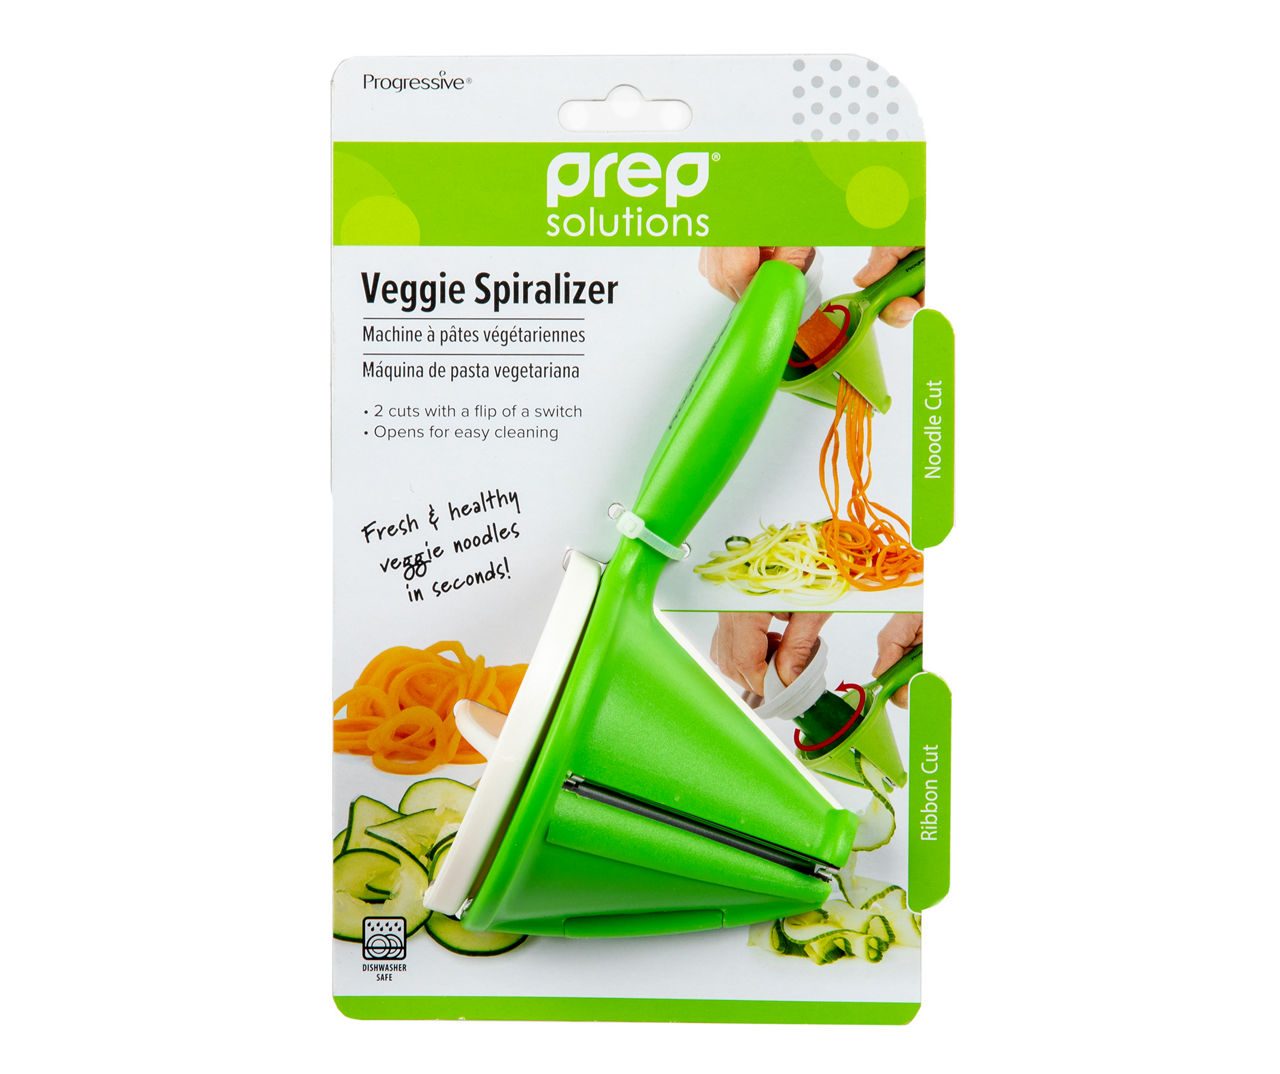 Progressive Green Veggie Spiralizer with Handle